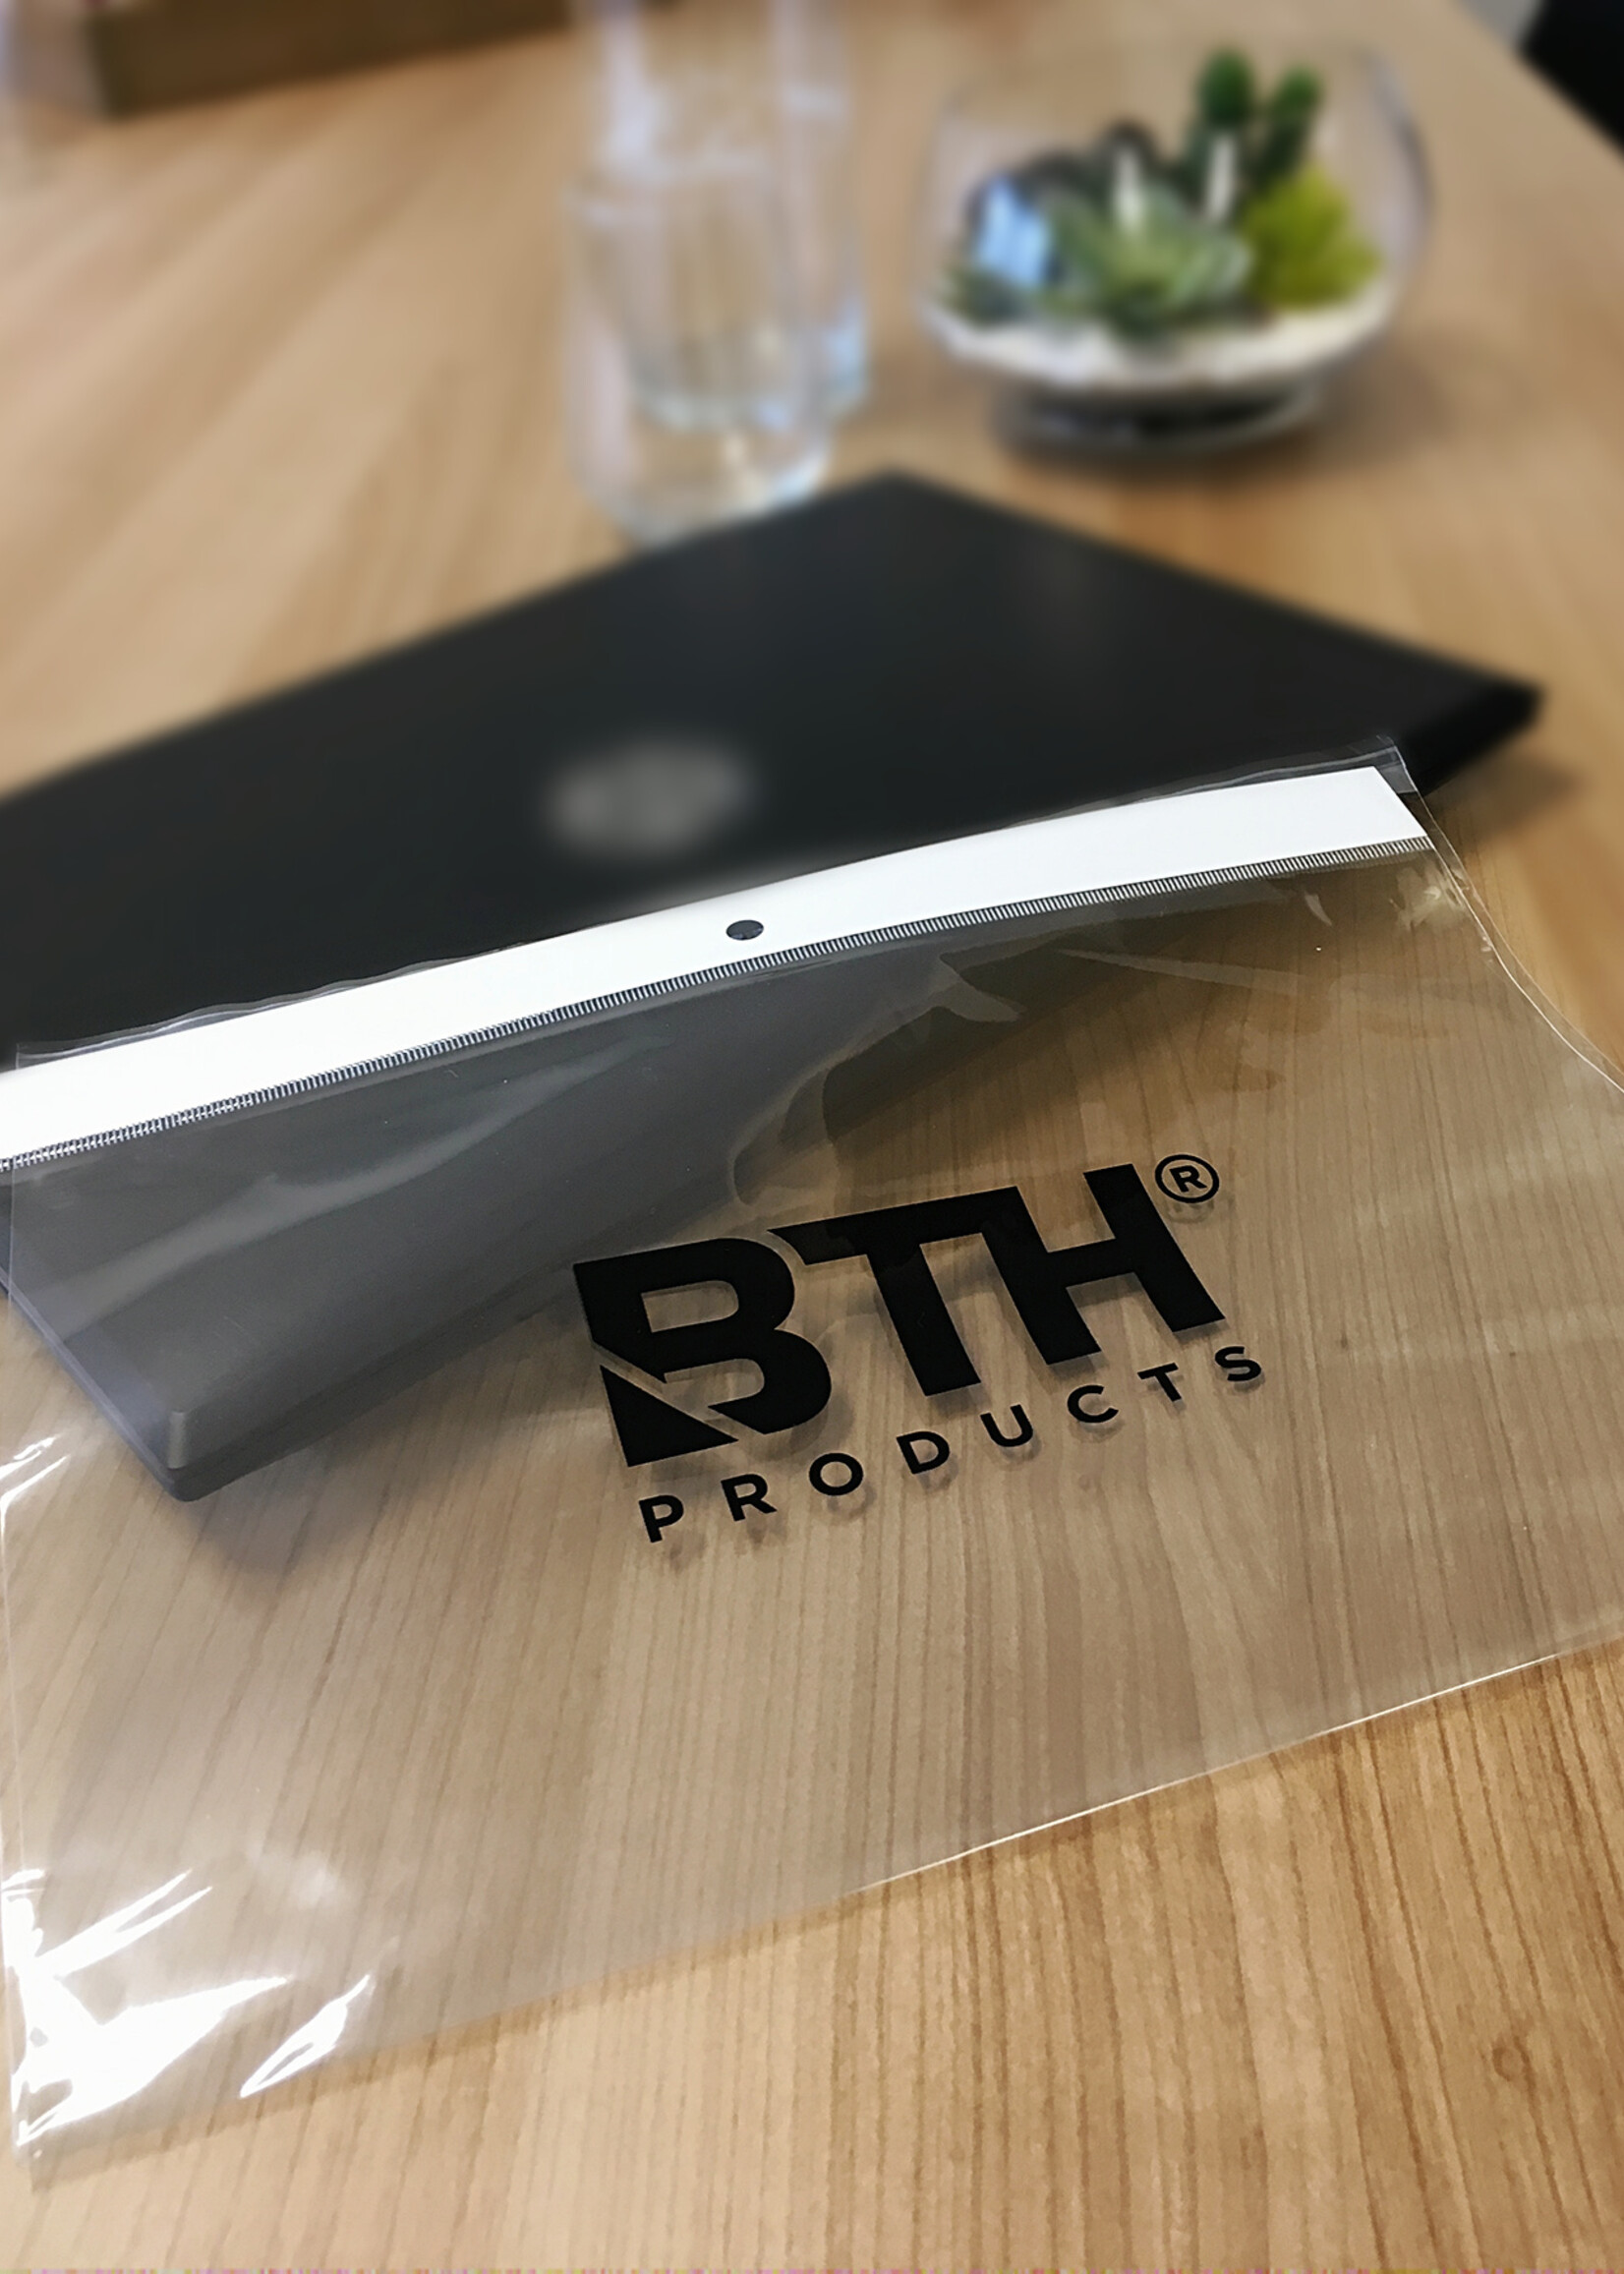 BTH BTH iPad Pro 11 inch (2021) Hoesje Met Apple Pencilhouder En Screenprotector - Lichtblauw